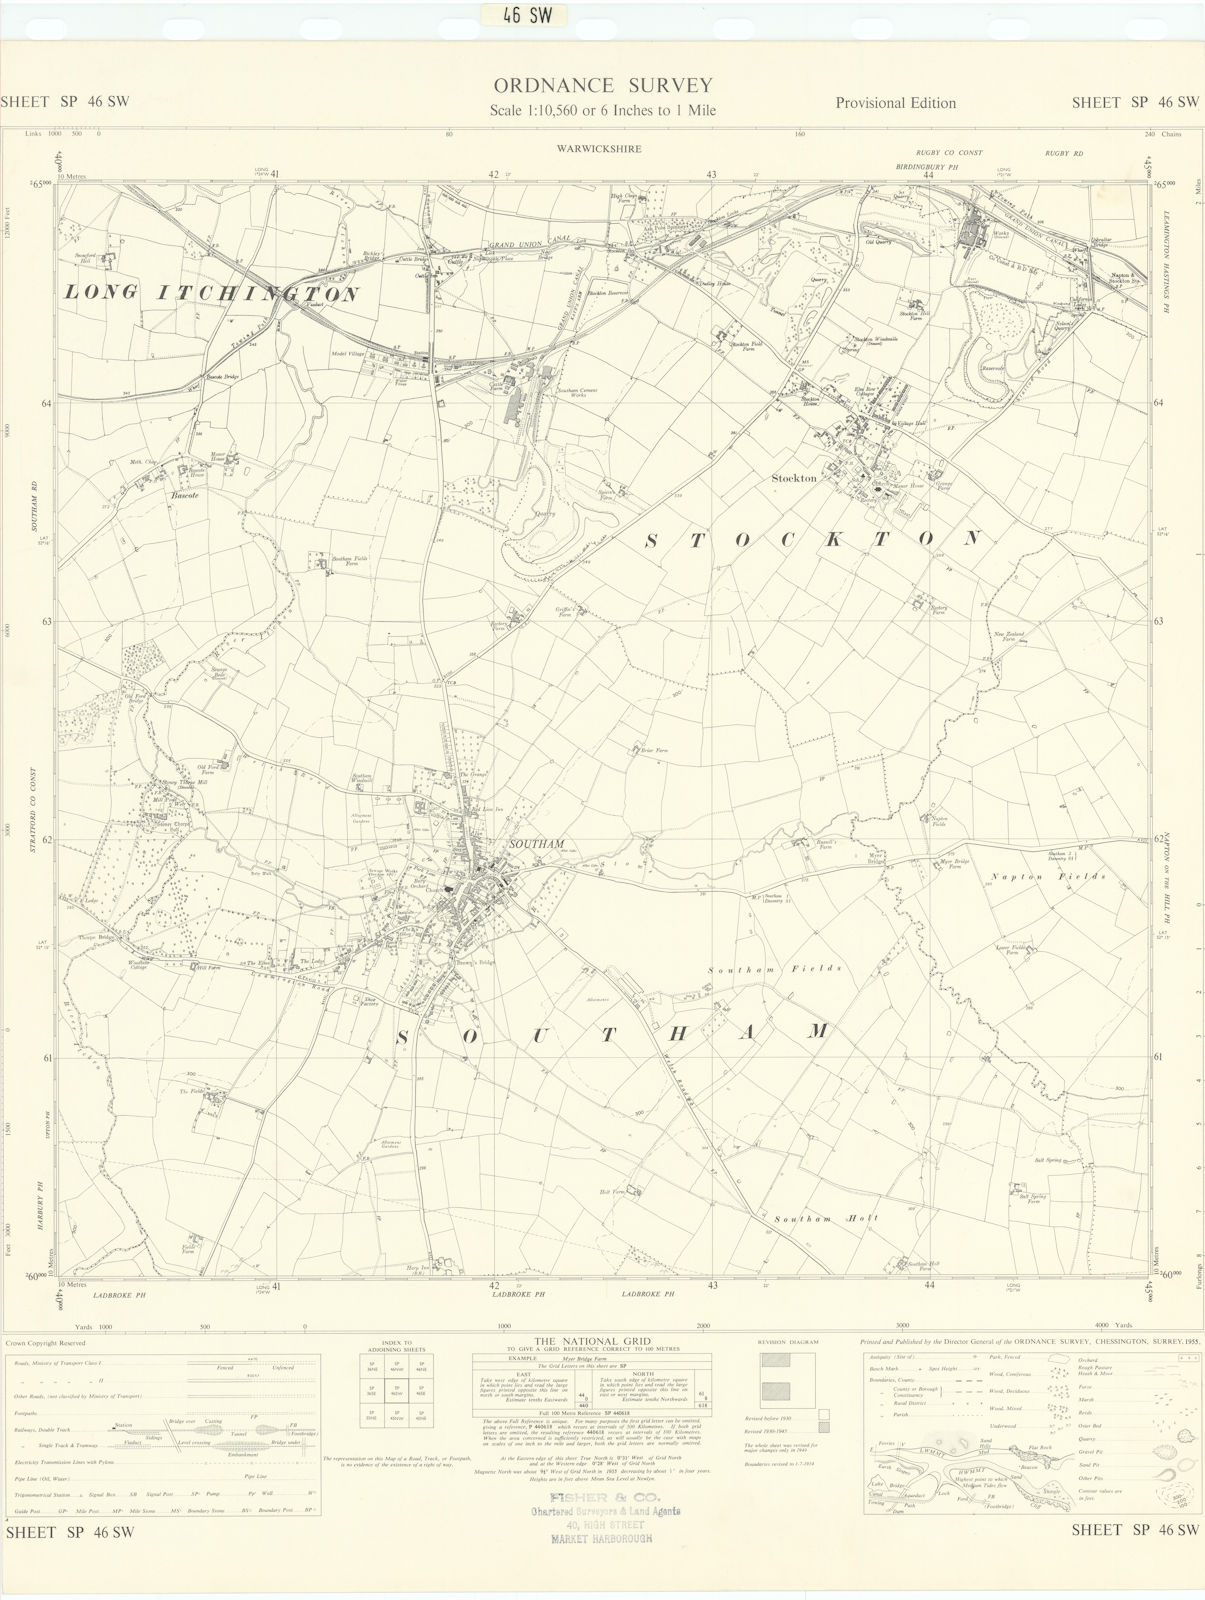 Ordnance Survey Sheet SP46SW Warwickshire Southham Stockton 1955 old map